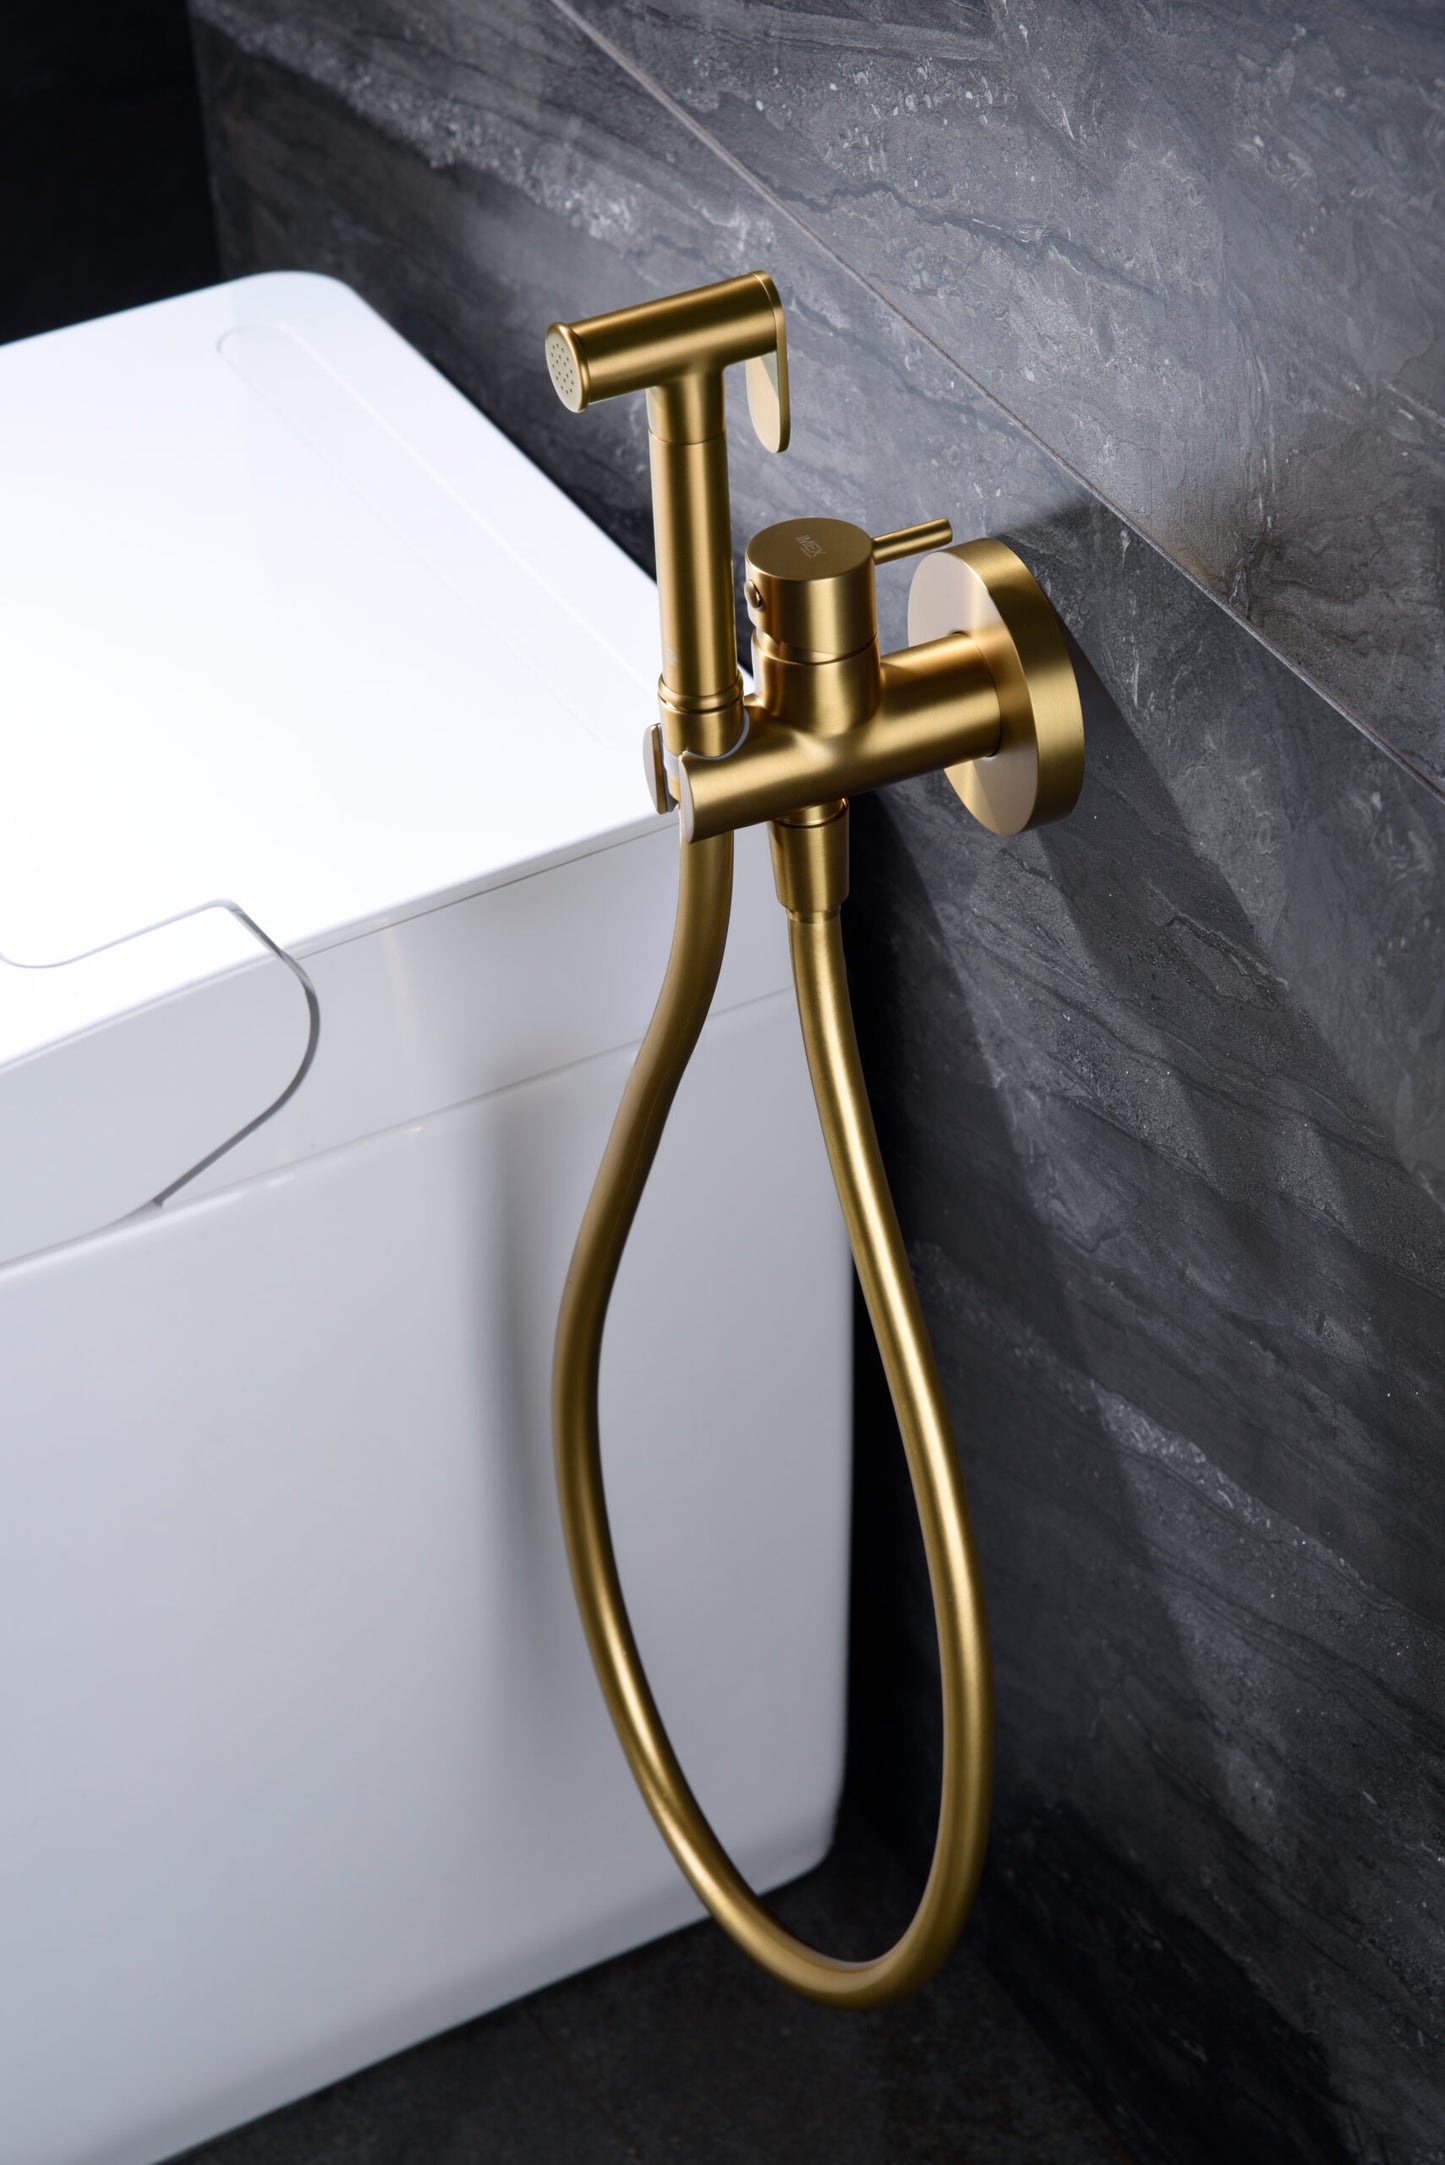 Imex Munich brushed gold built-in bidet faucet